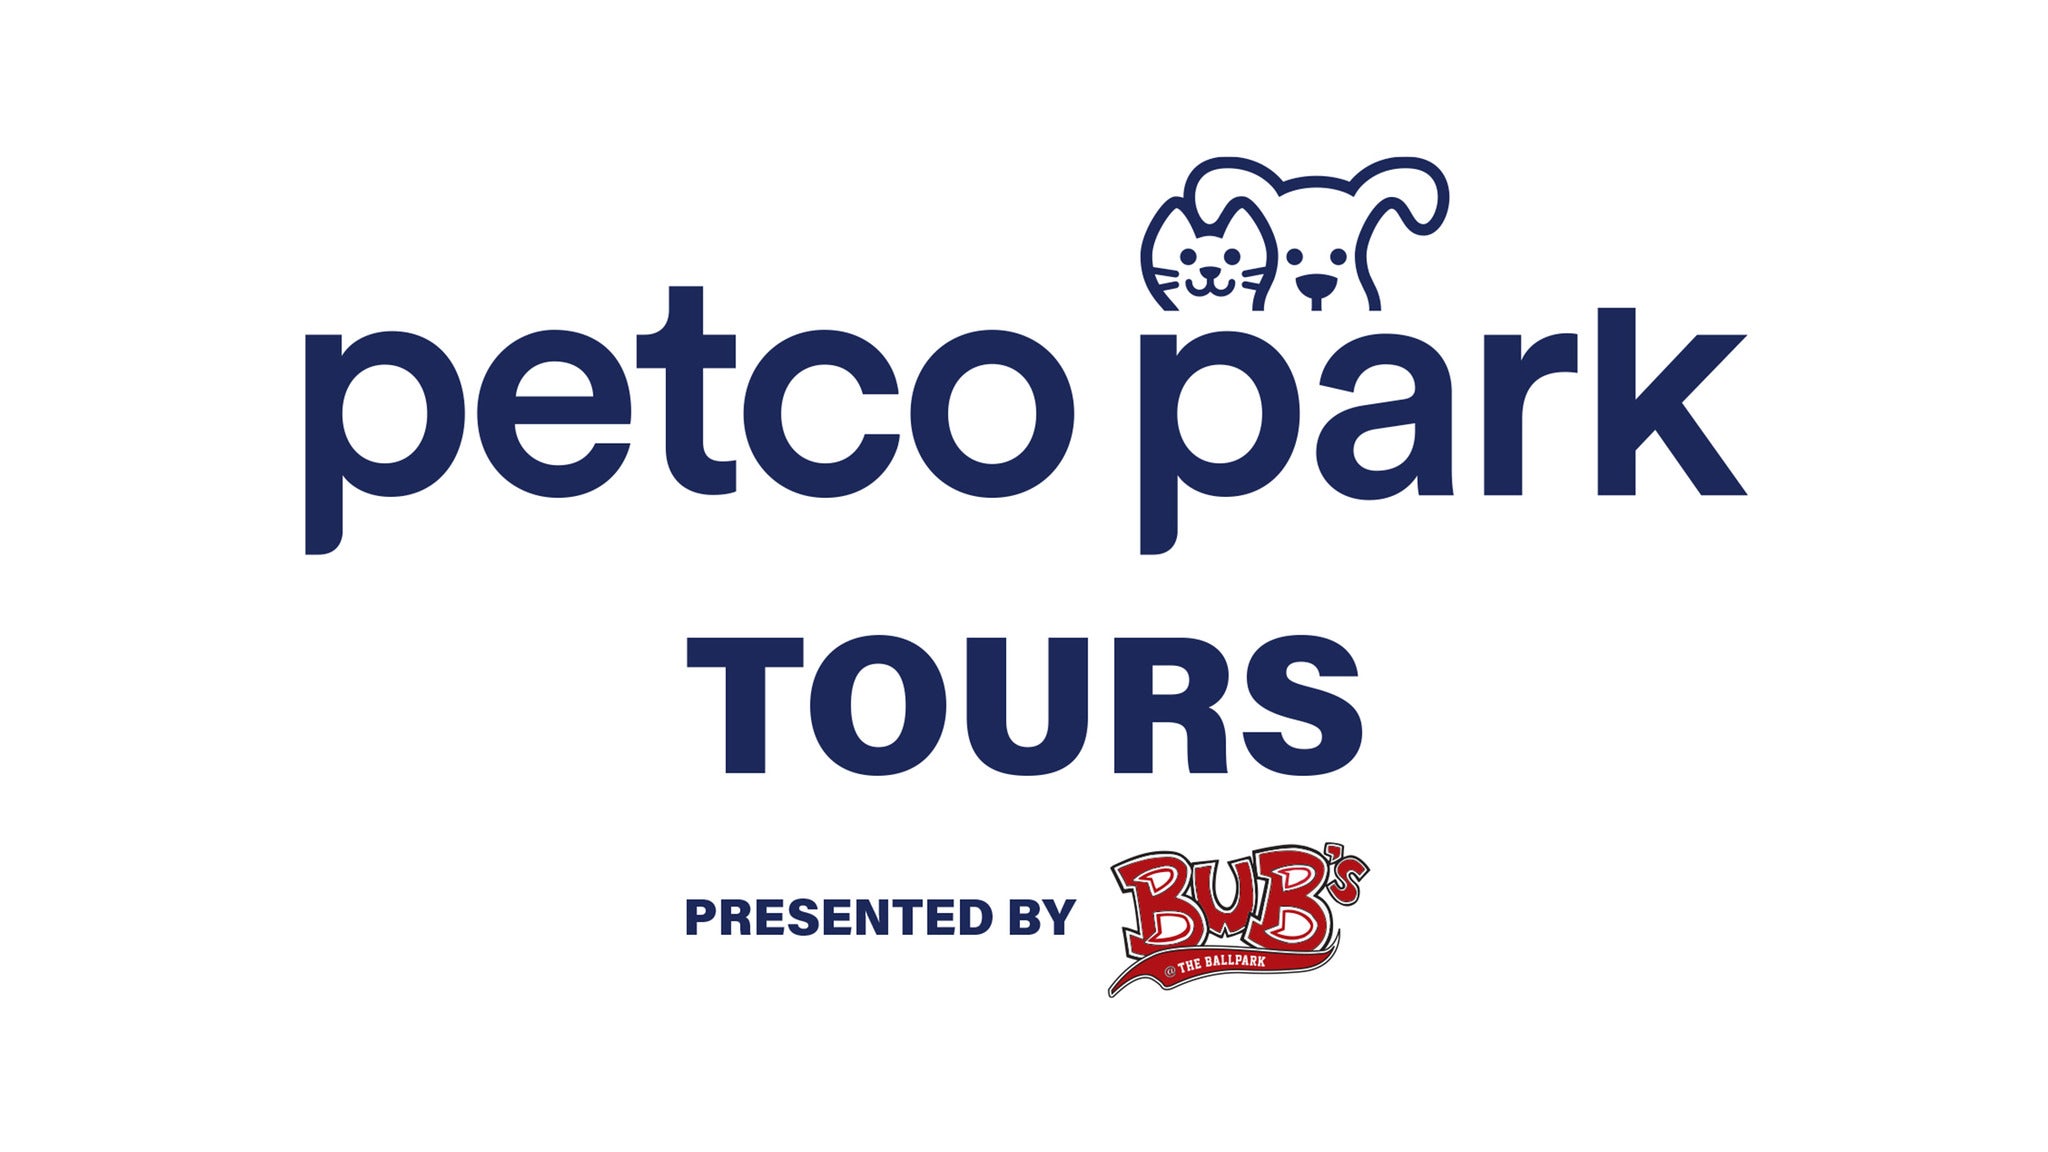 Petco Park Tours at Petco Park